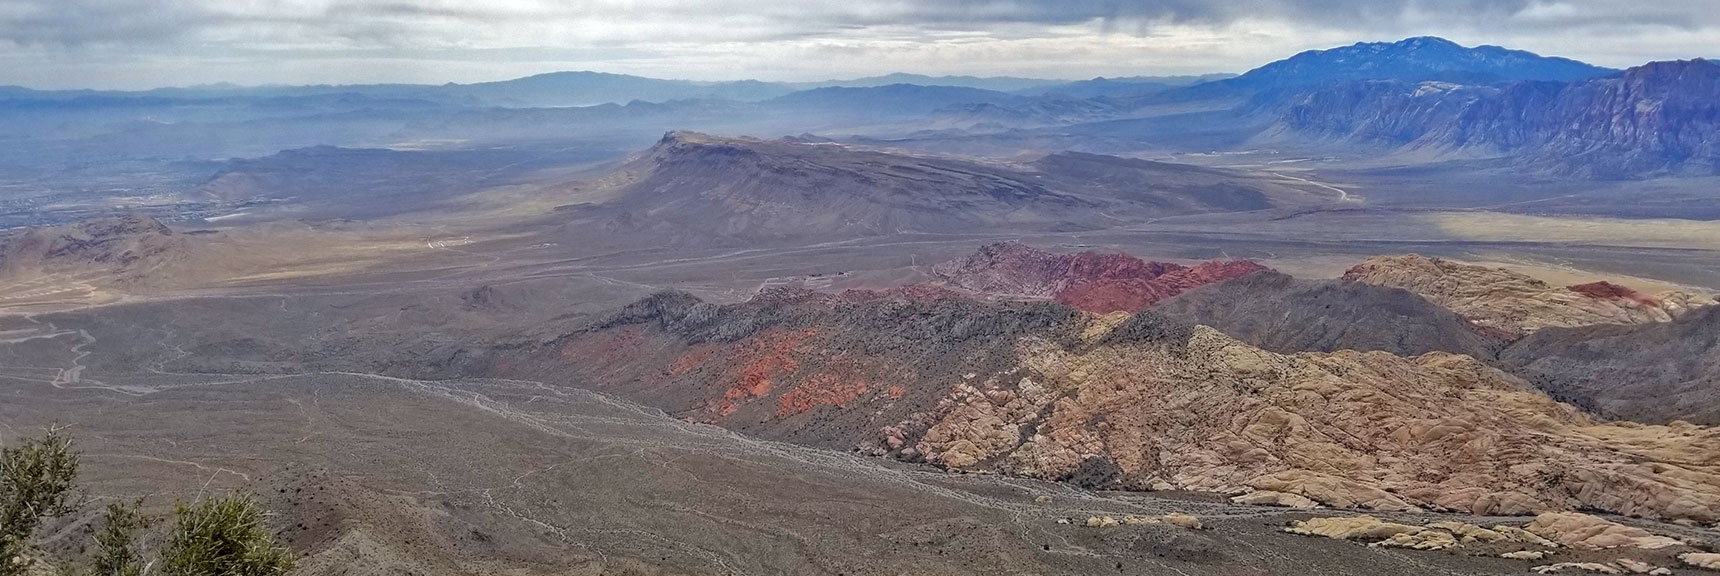 Damsel Peak Summit in Calico Basin, Nevada 008